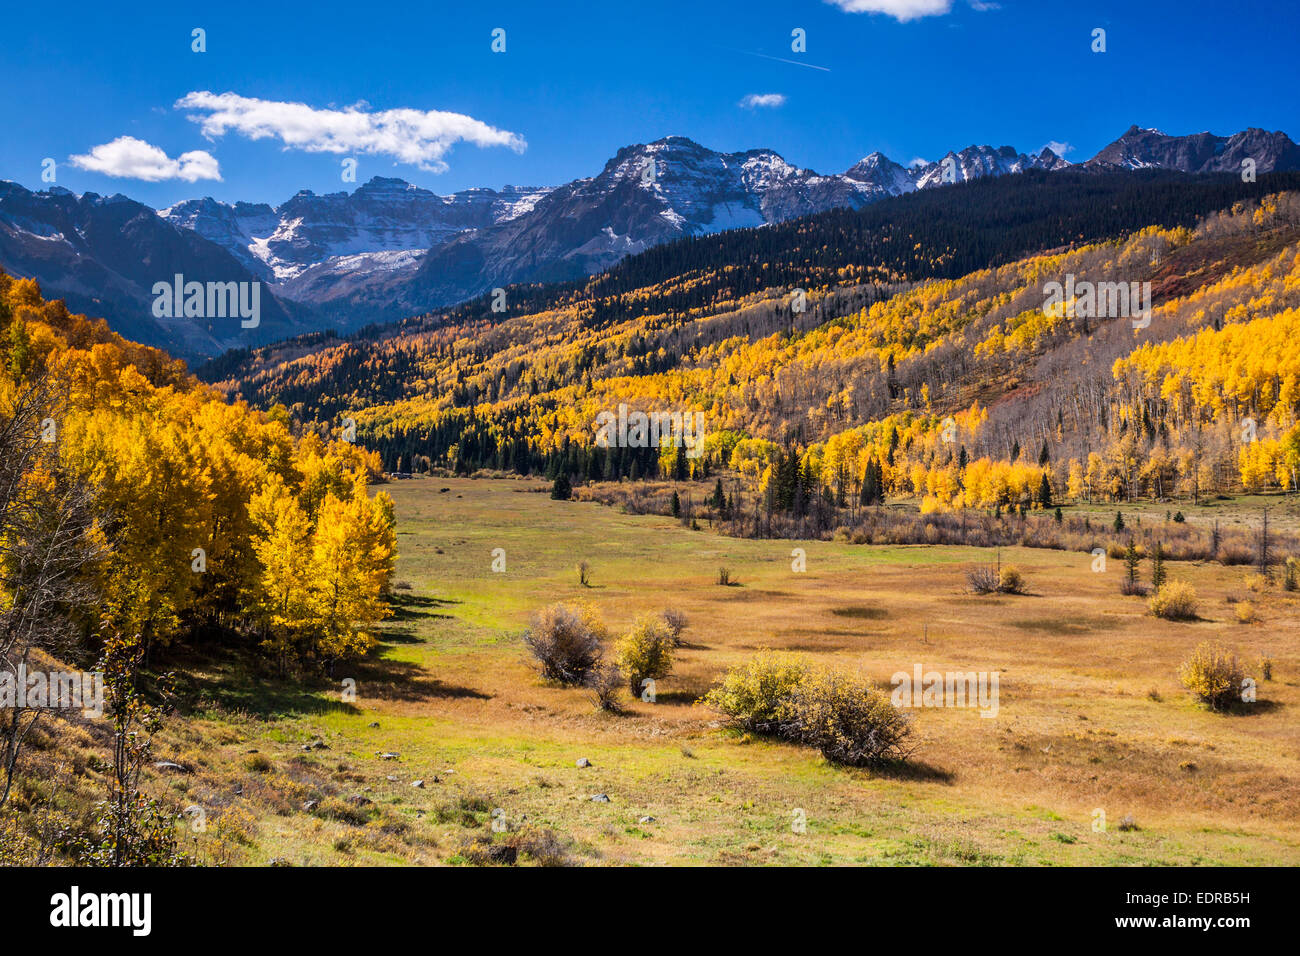 The Sneffels Range of the San Juan Mountains in Southwest Colorado in ...